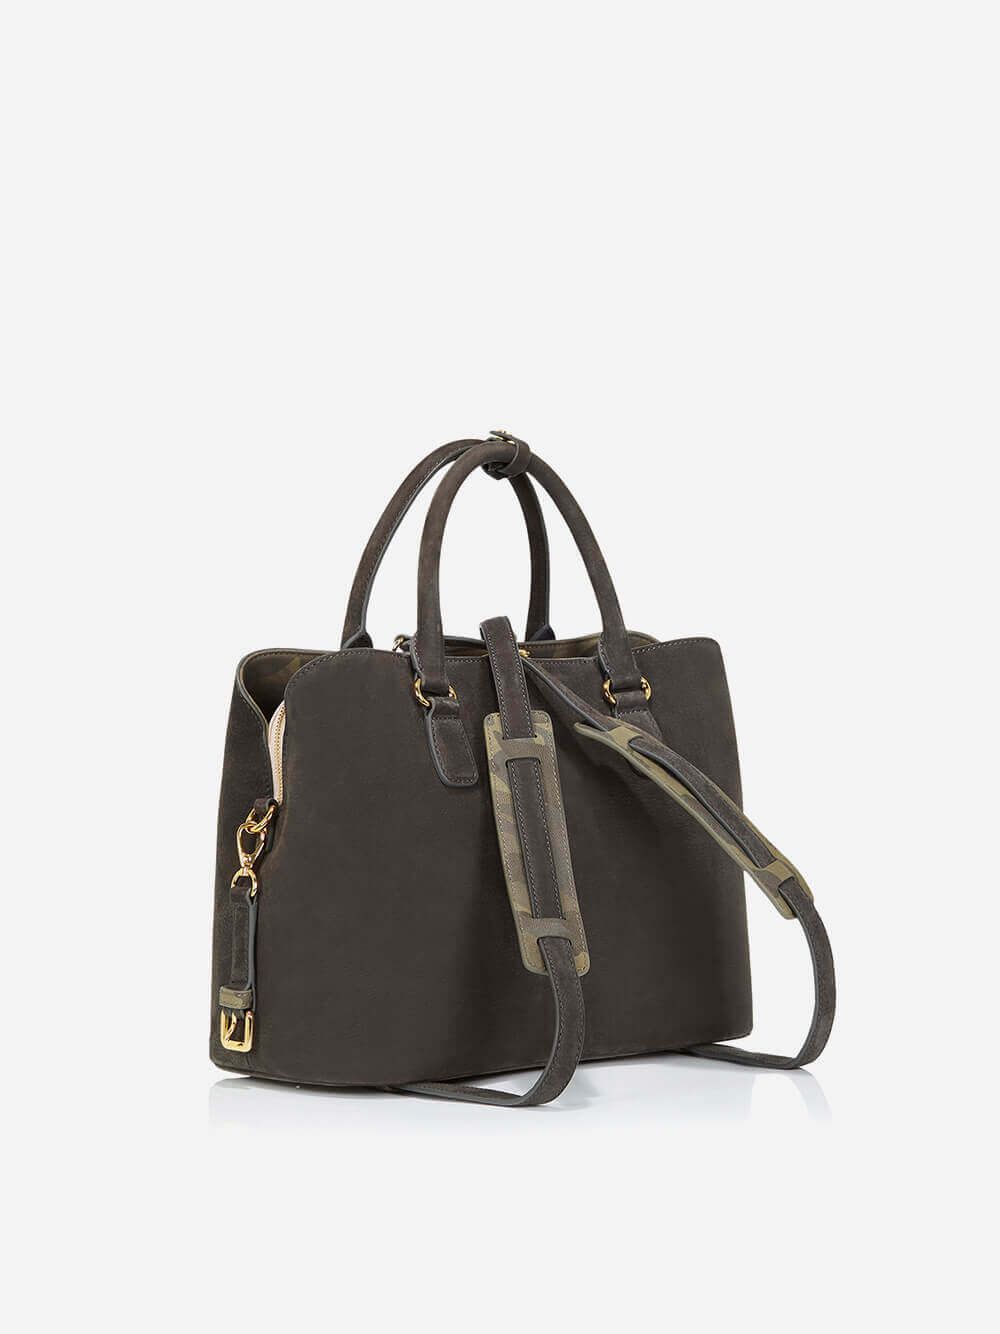 M Khaki Bag | Any Di